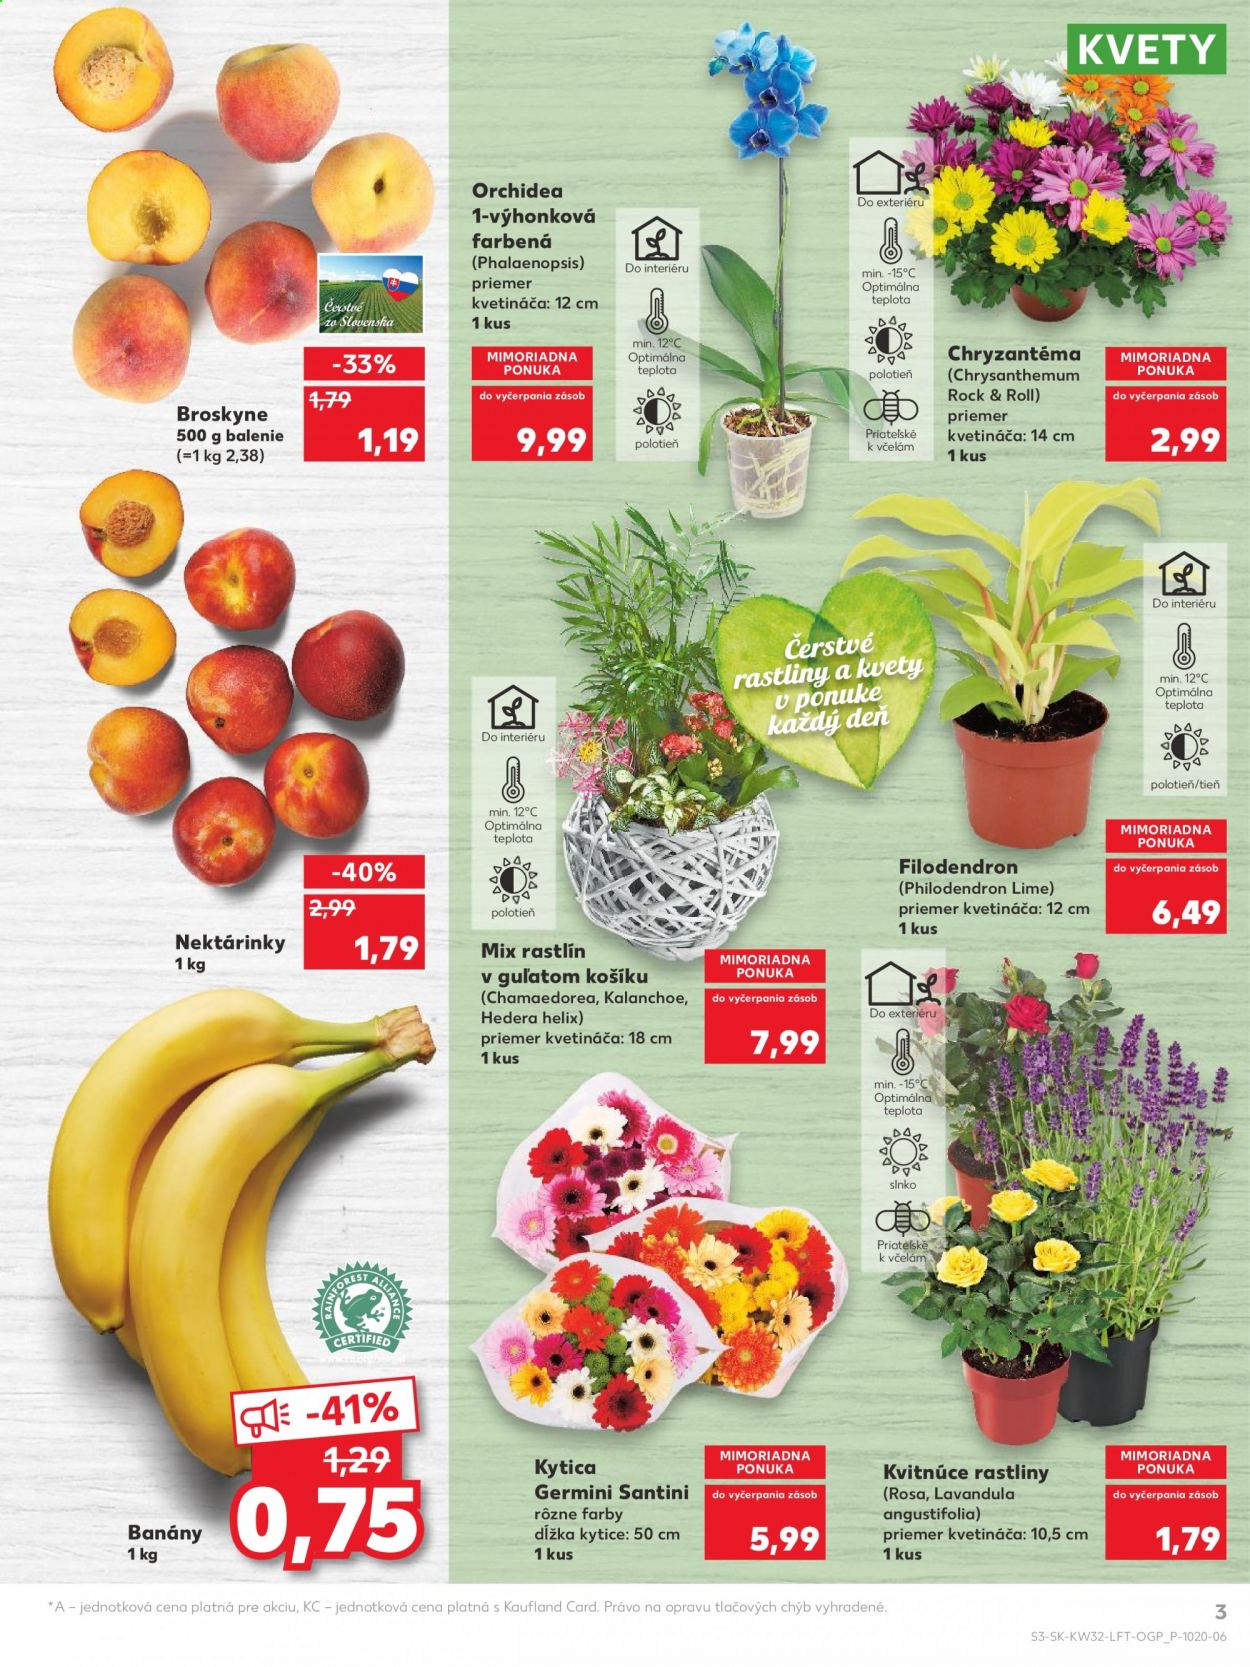 thumbnail - Leták Kaufland - 12.8.2021 - 18.8.2021 - Produkty v akcii - broskyne, nektárinky, banány, kytica, kvitnúce rastliny, mix rastlín, filodendron, chryzantéma, orchidea. Strana 3.